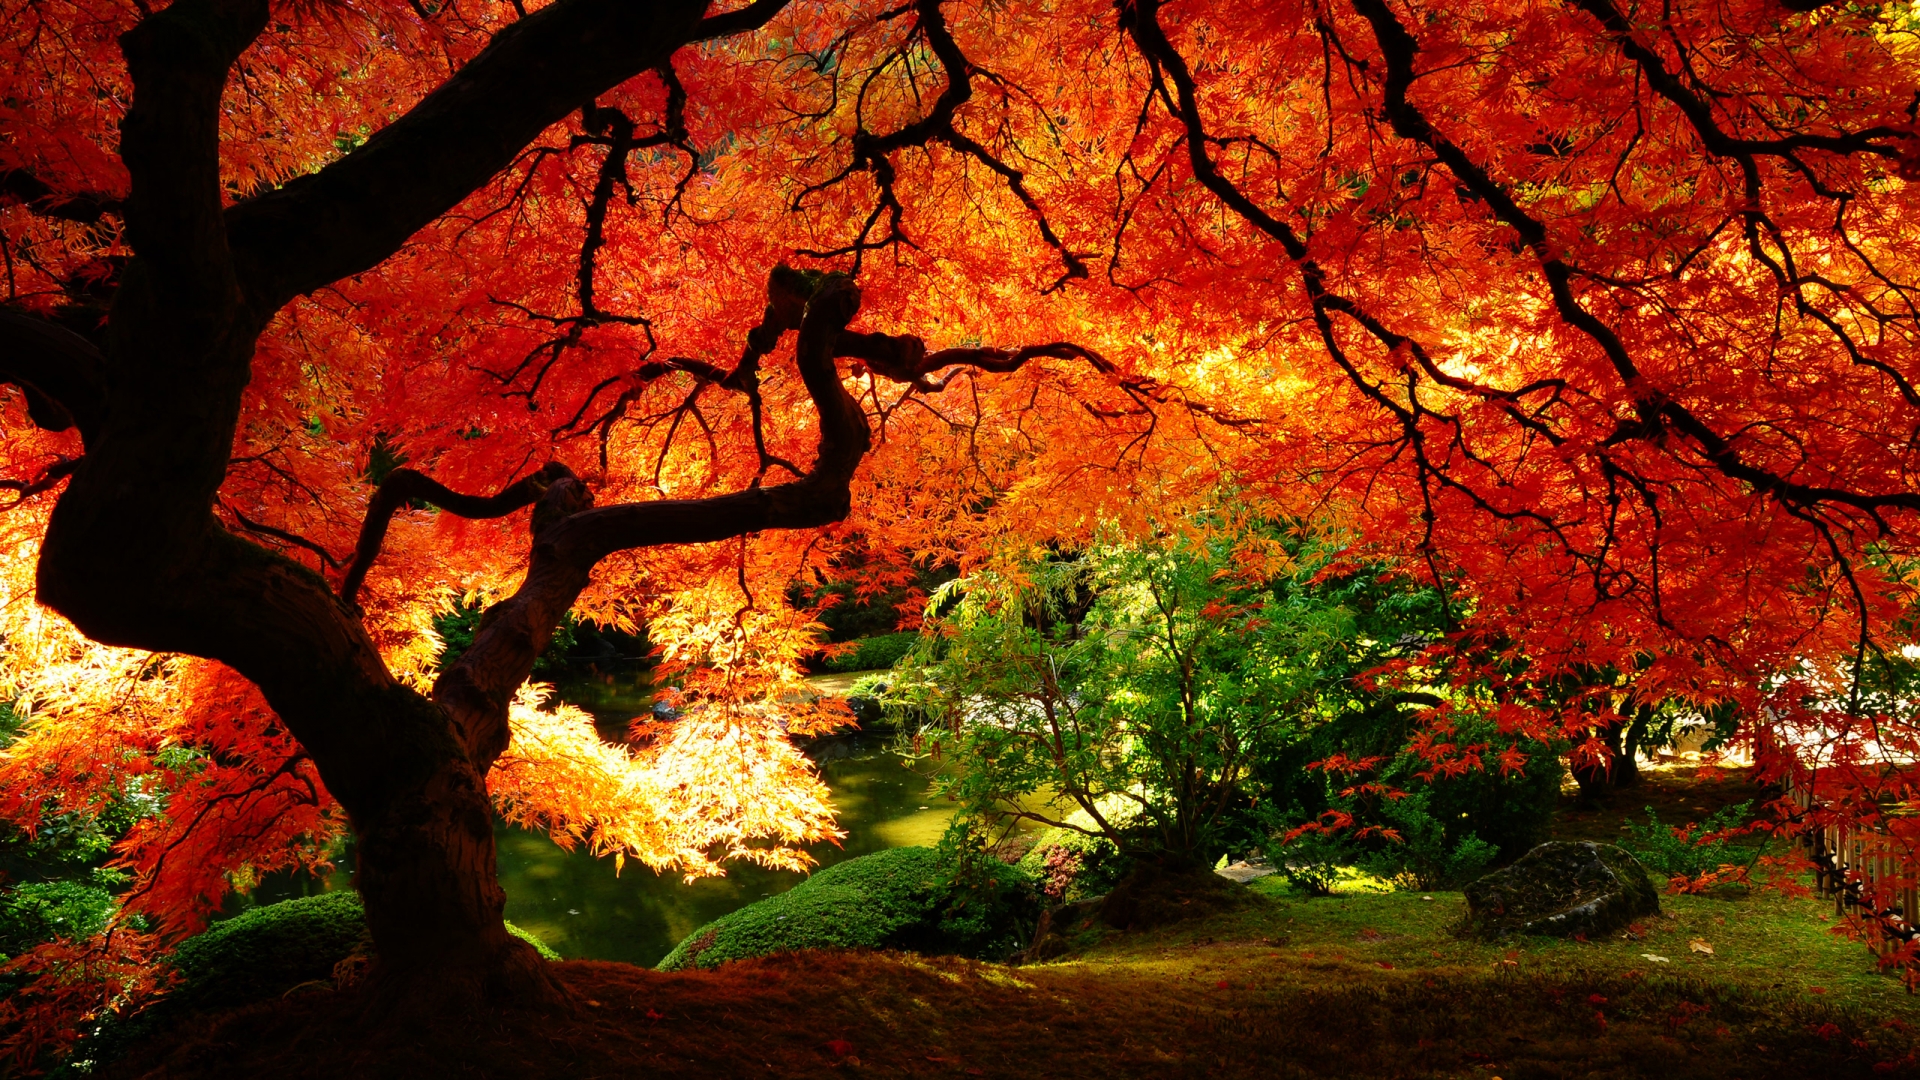 Fall Autumn Desktop Wallpaper In HD